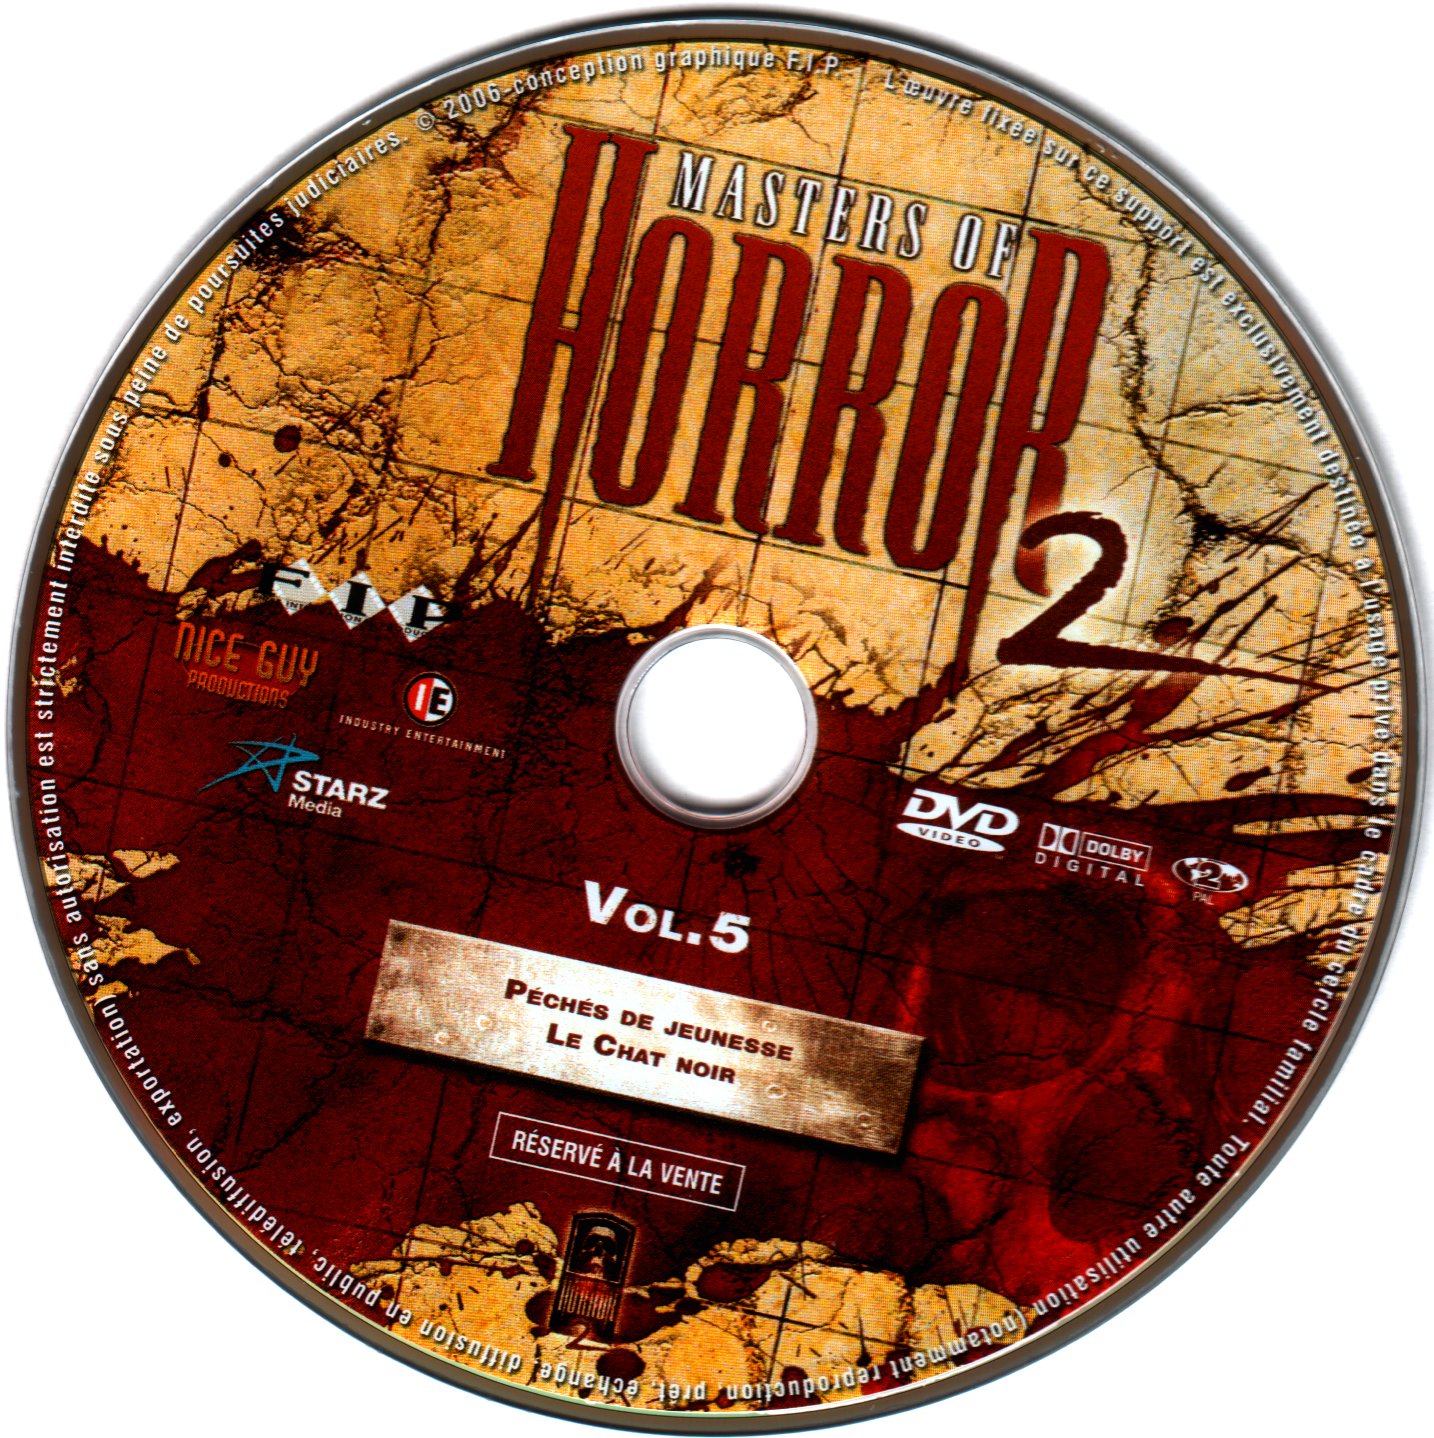 Masters of horror Saison 2 vol 5